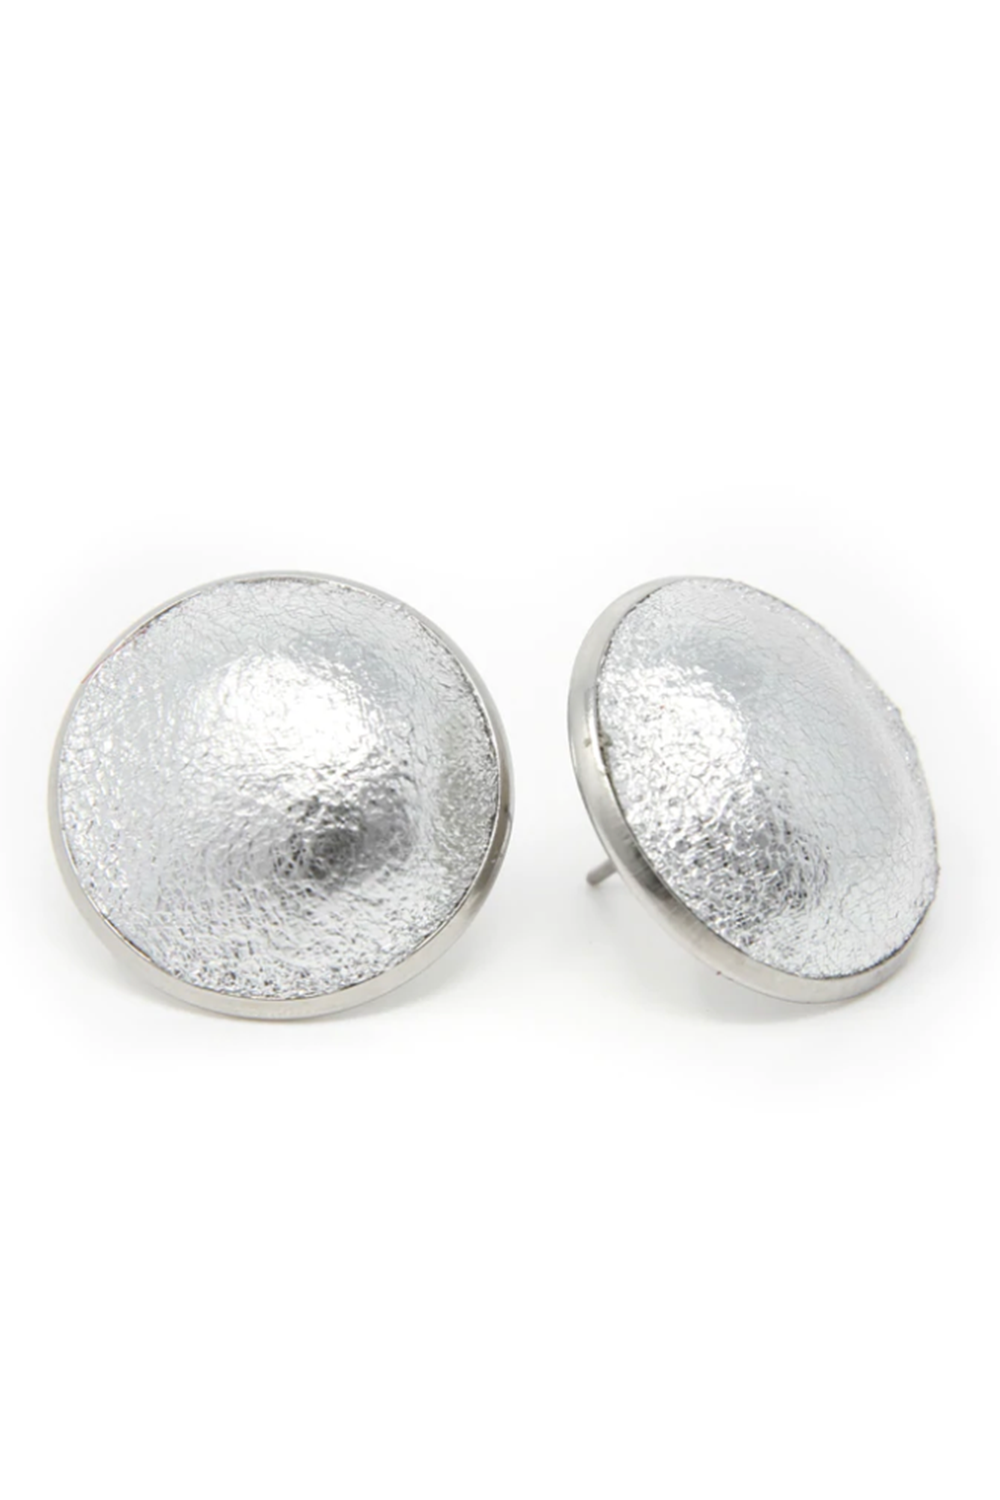 Keva "Full Circle" Button Earring - Silver Shimmer